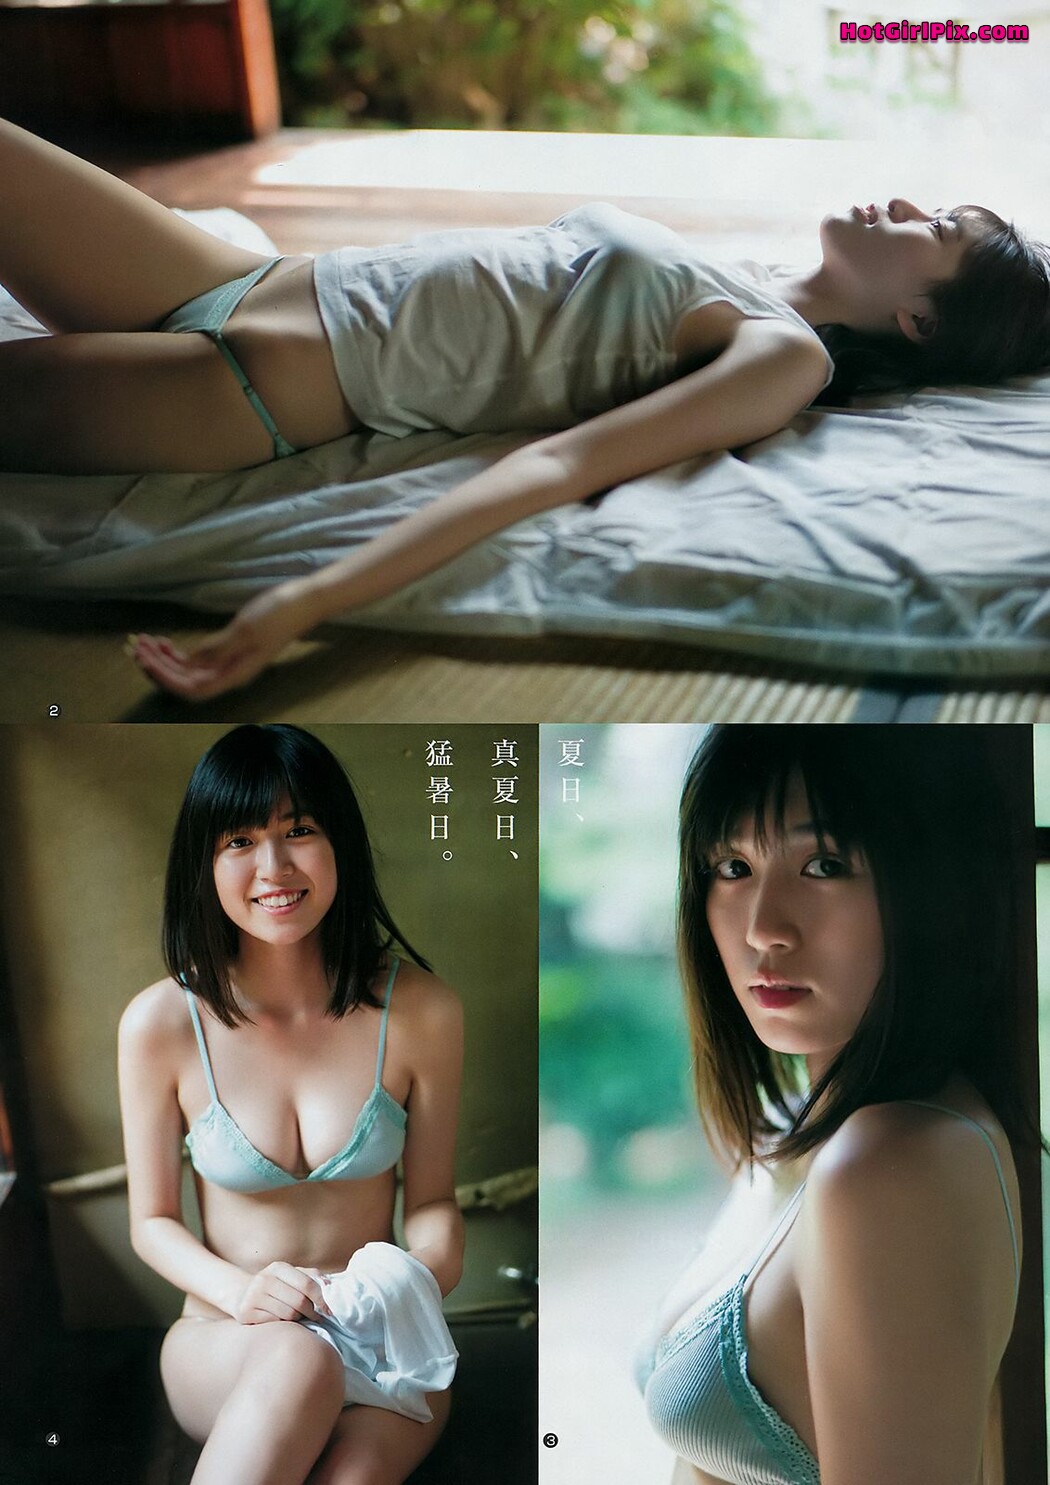 [FRIDAY] Kitazu Yui - "Superbest beauty ボディ18 years old"